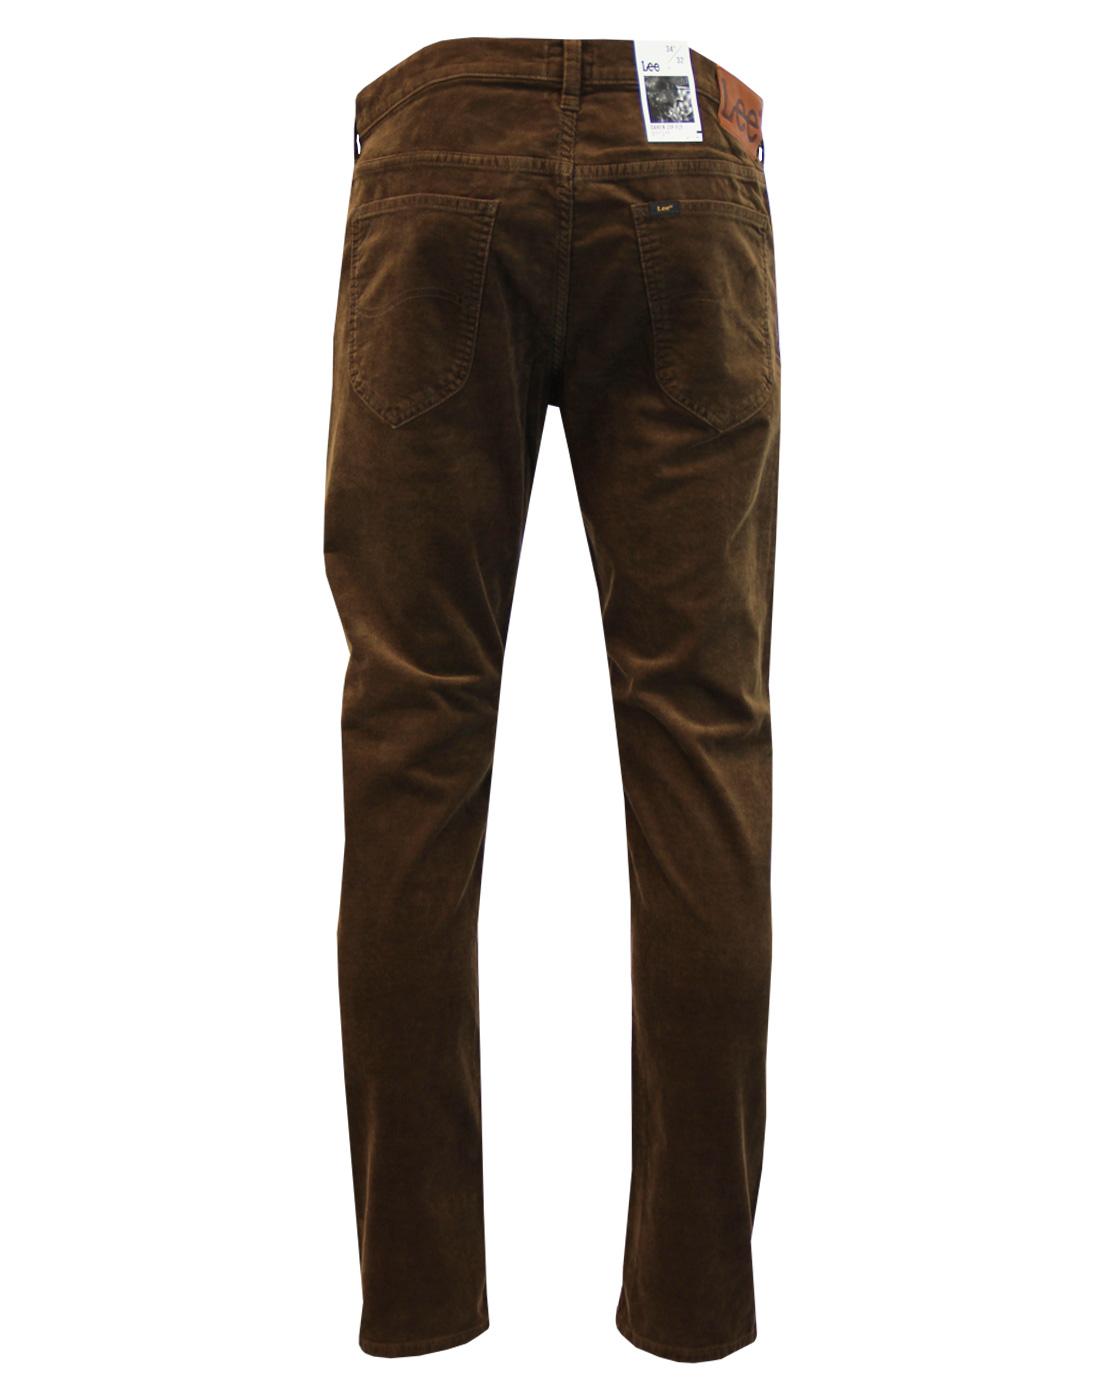 LEE Daren Men's Retro 1960s Mod Slim Cord Trousers in Dark Brown